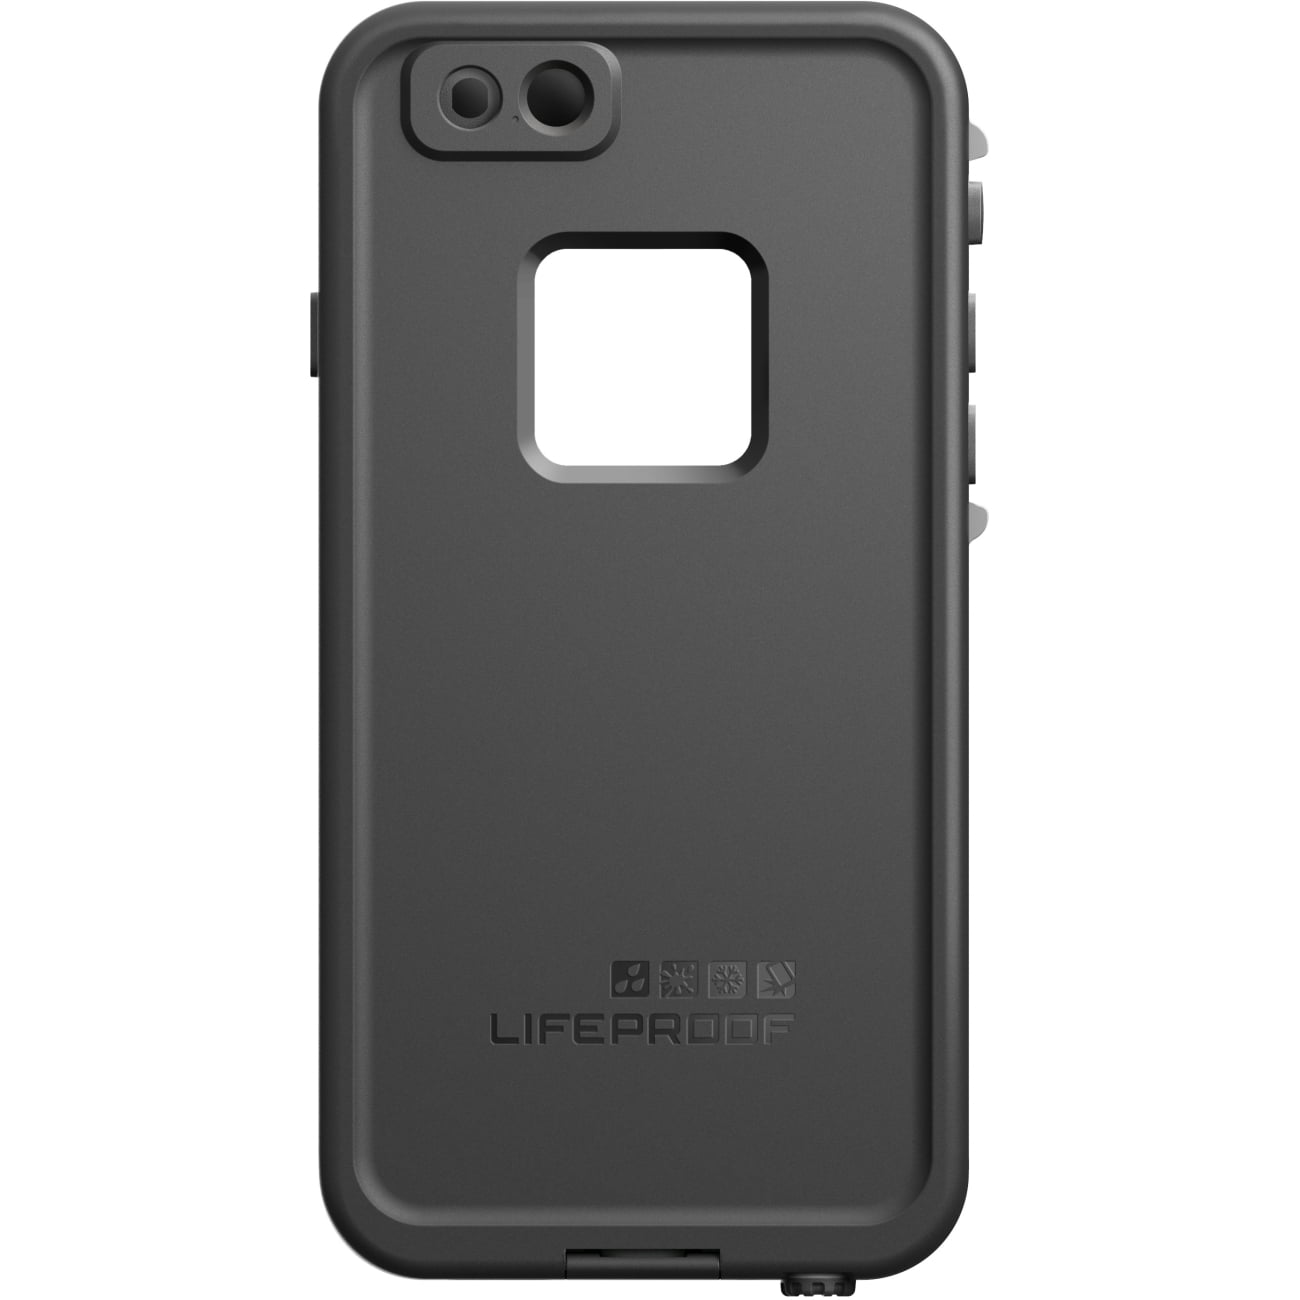 Totalmente Nuevo Teléfono Celular LifeProof frē caso para Apple iPhone 6 e iPhone 6s 